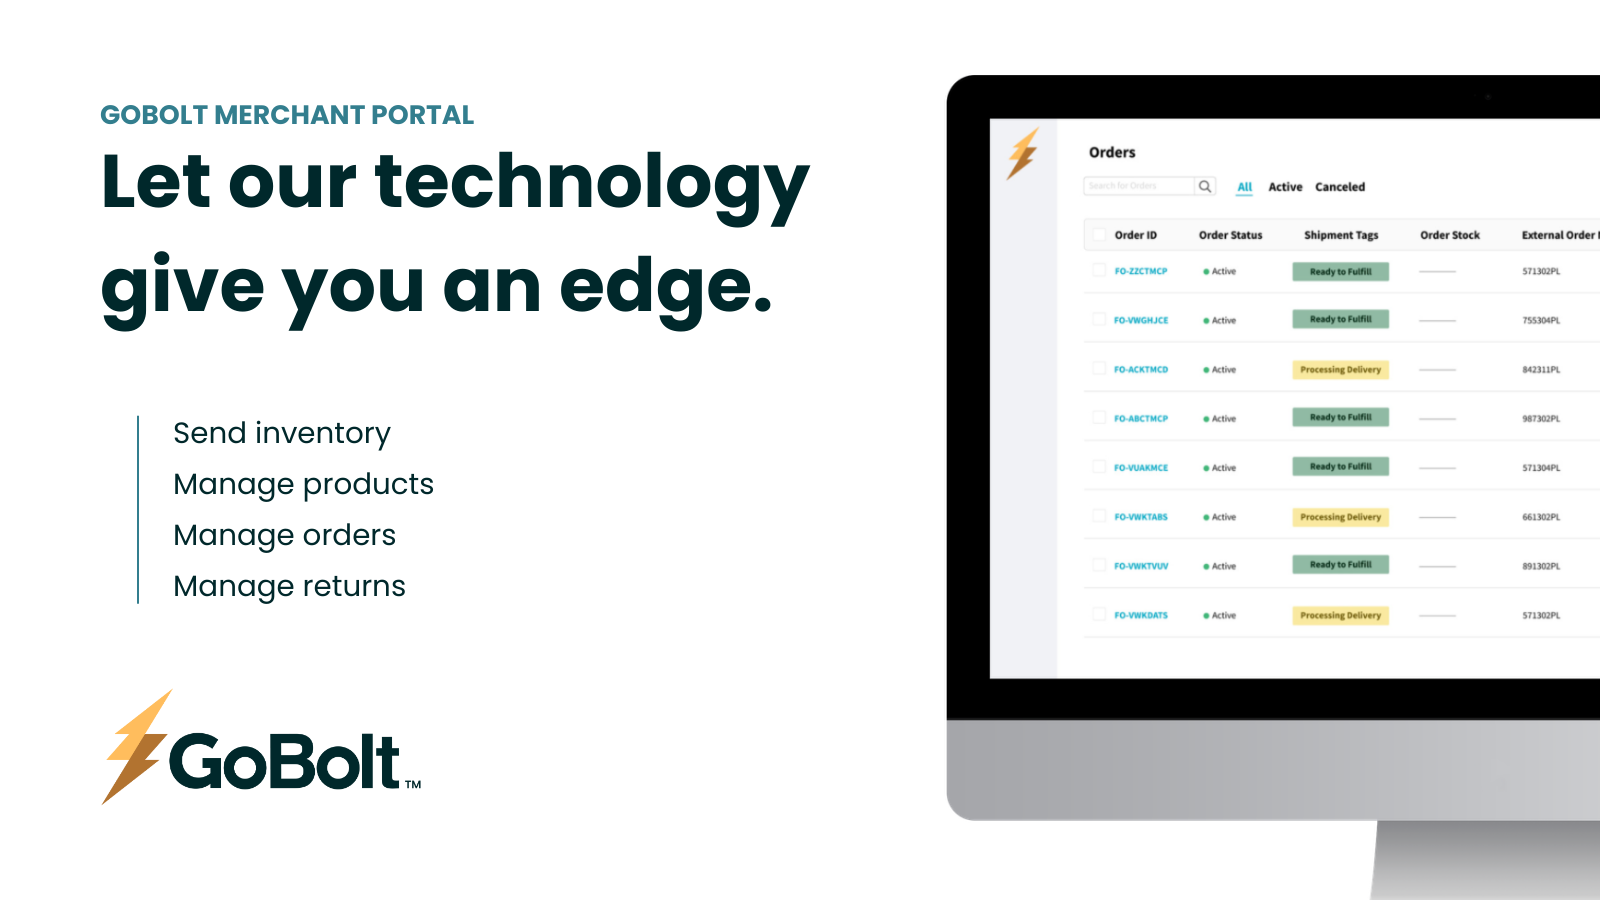 GoBolt Merchant Portal - Let our technology give you an edge.